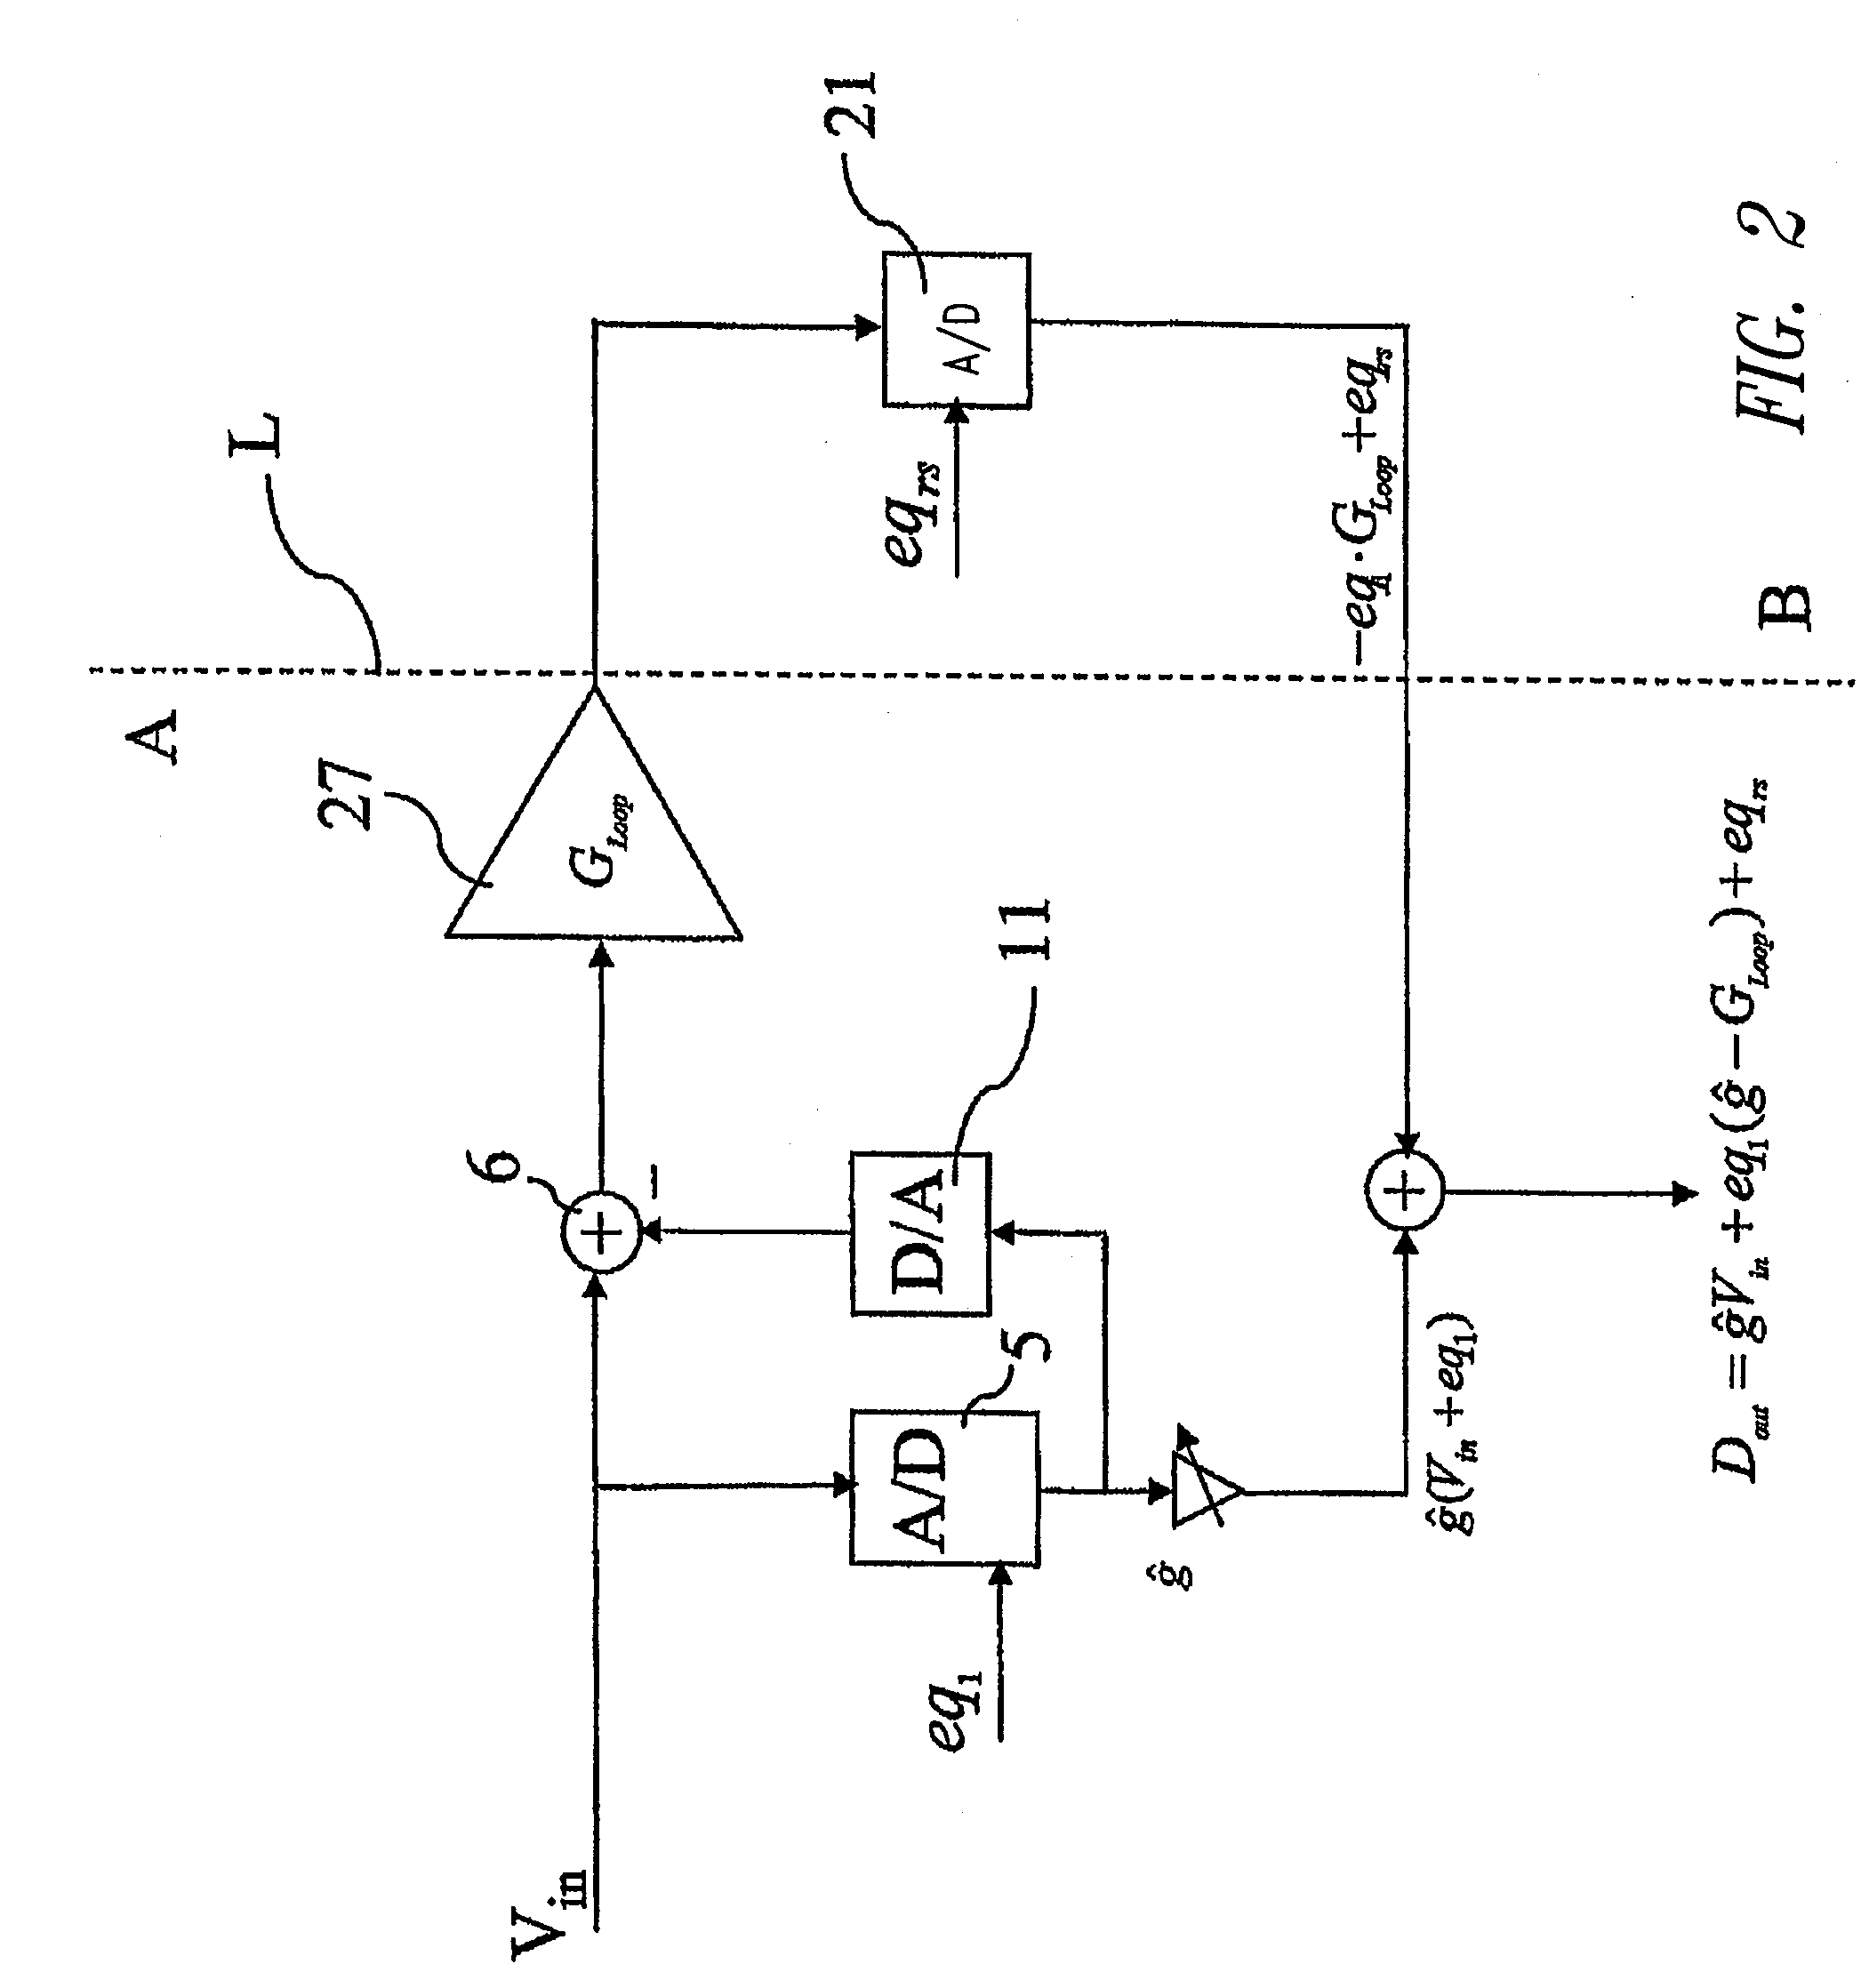 Multistage analog/digital converter and method for calibrating said converter